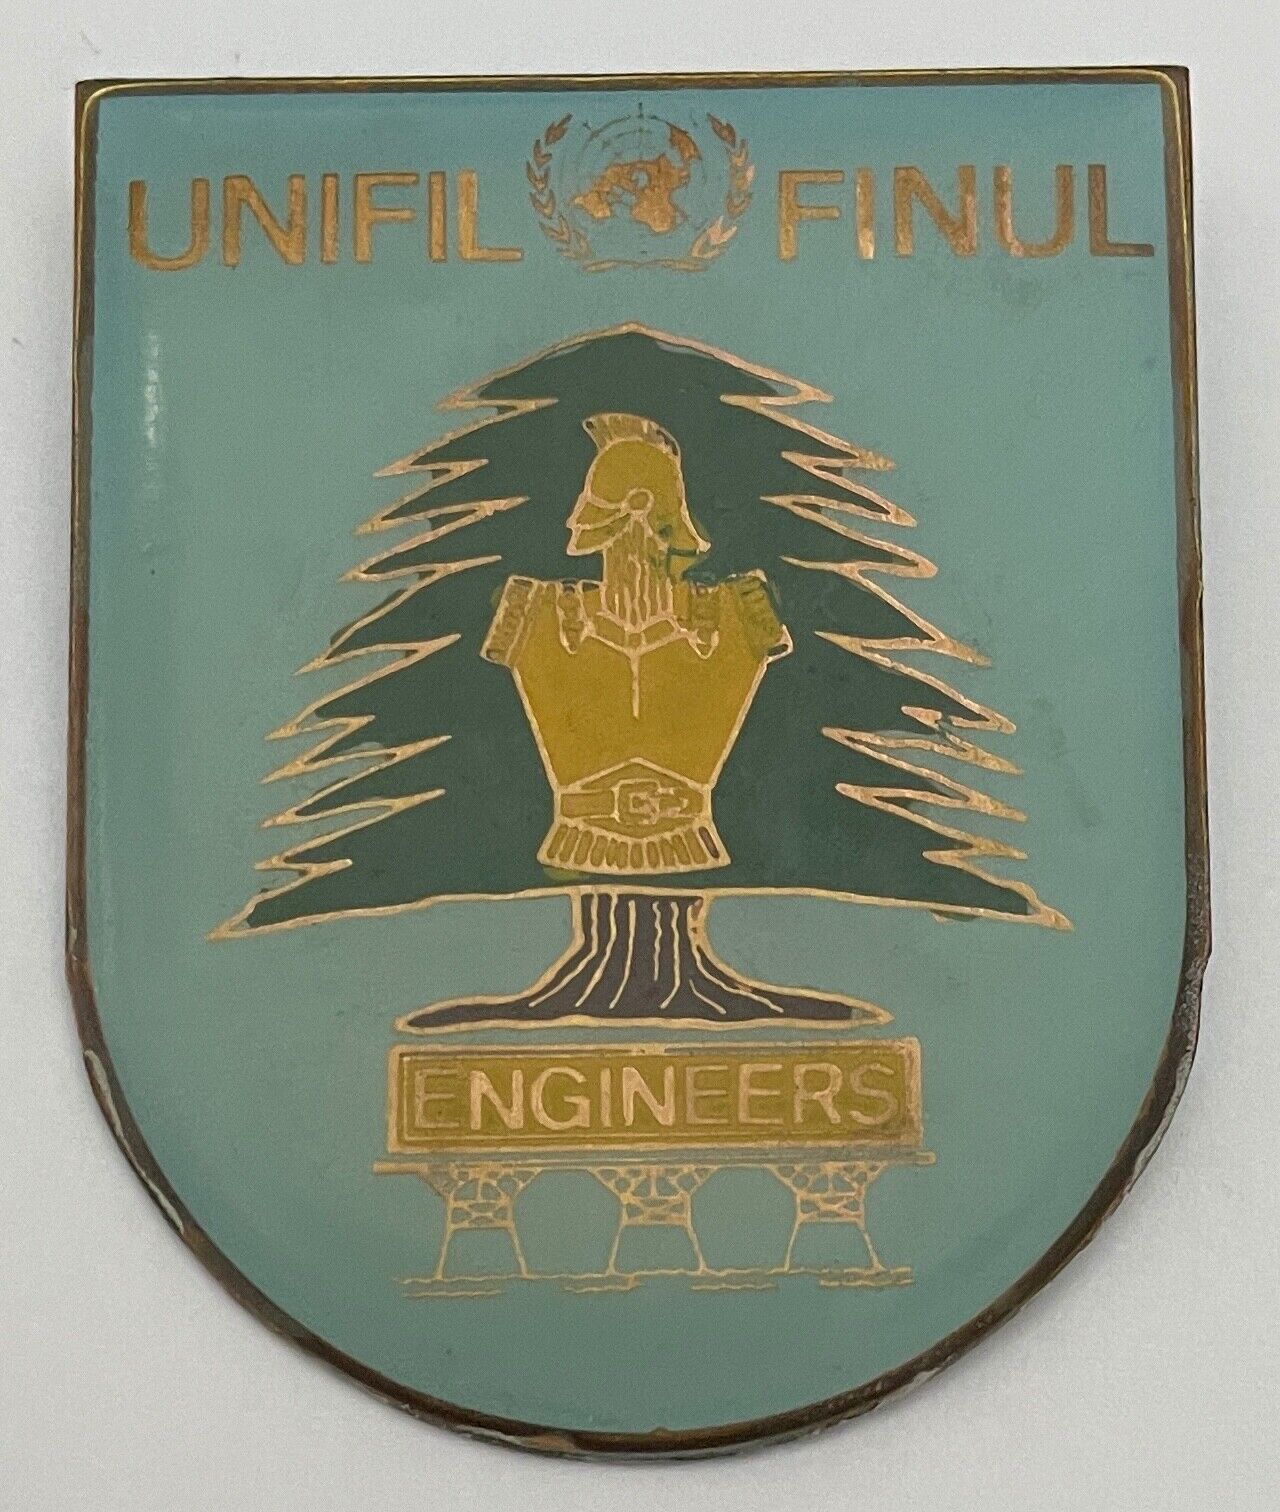 Opex. Genius. UNIFIL - FINUL. Engineers. Lebanon (L117 Lib)